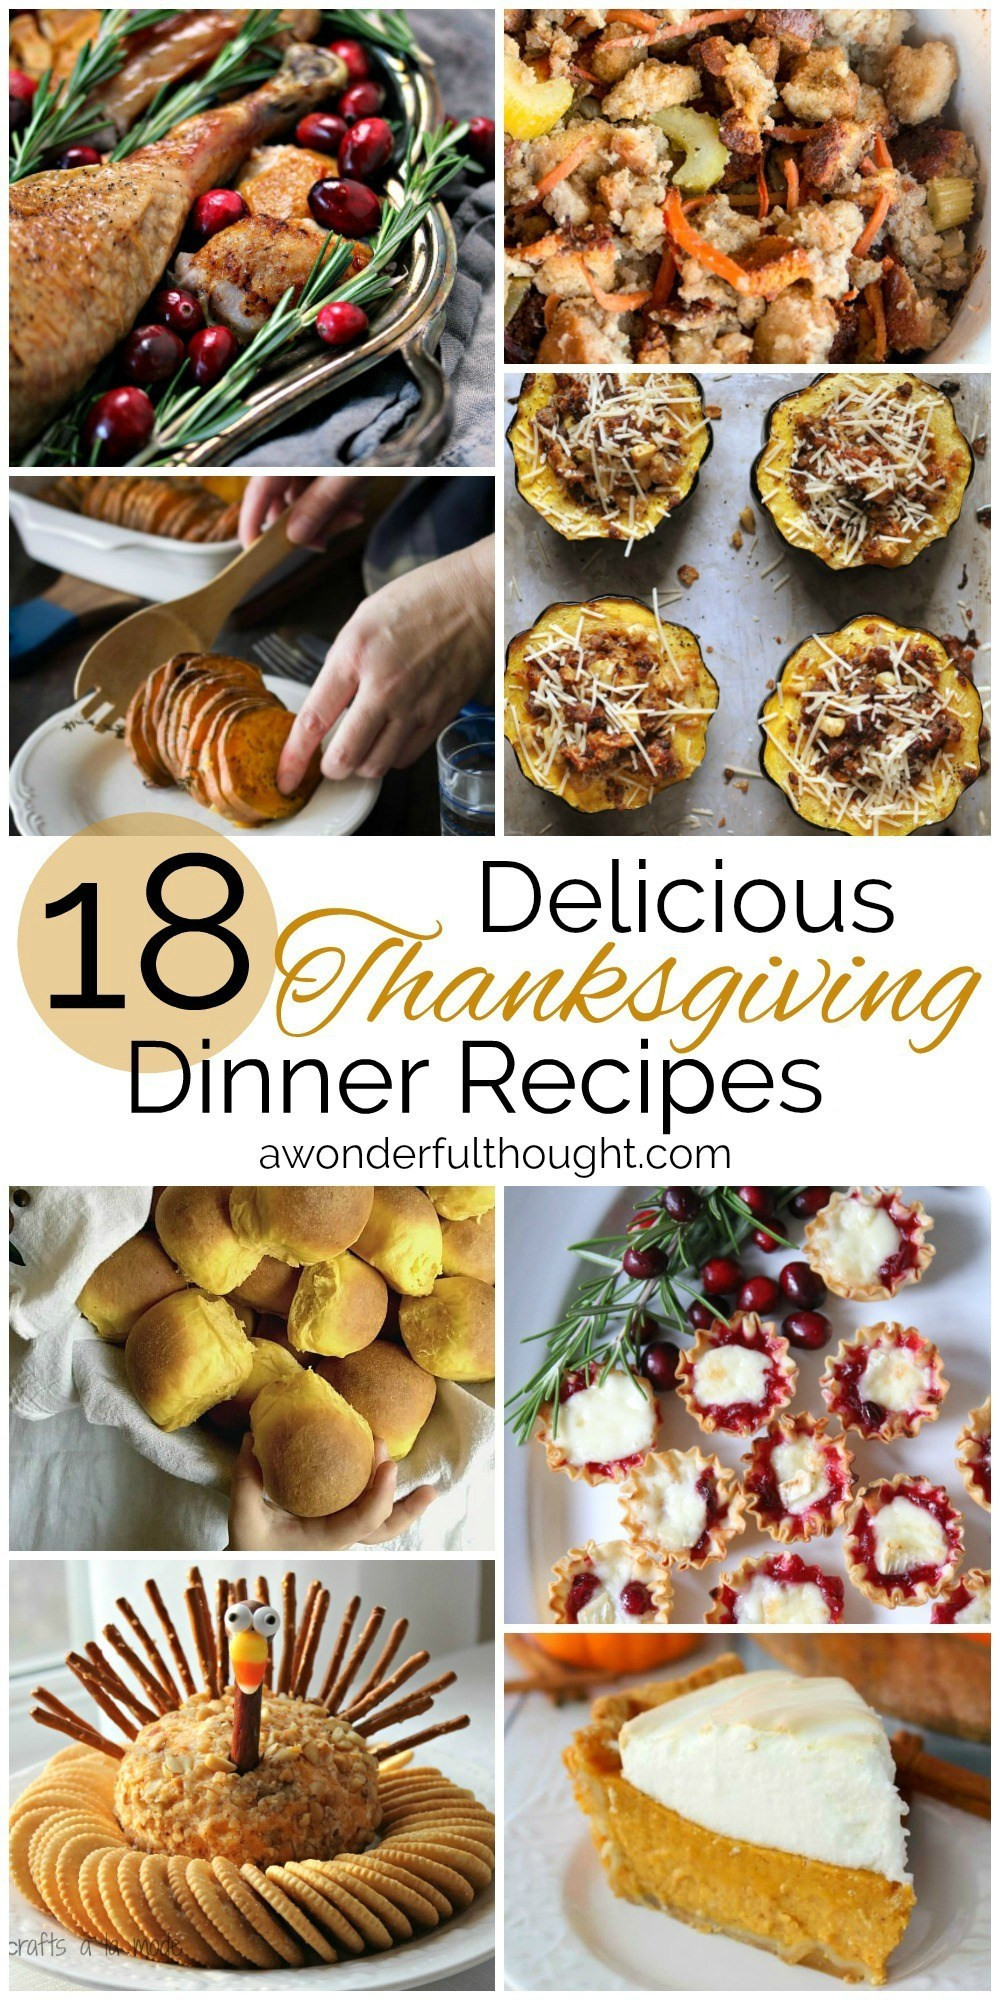 Thanksgiving Dinner Ideas Pinterest
 Thanksgiving Dinner Recipes